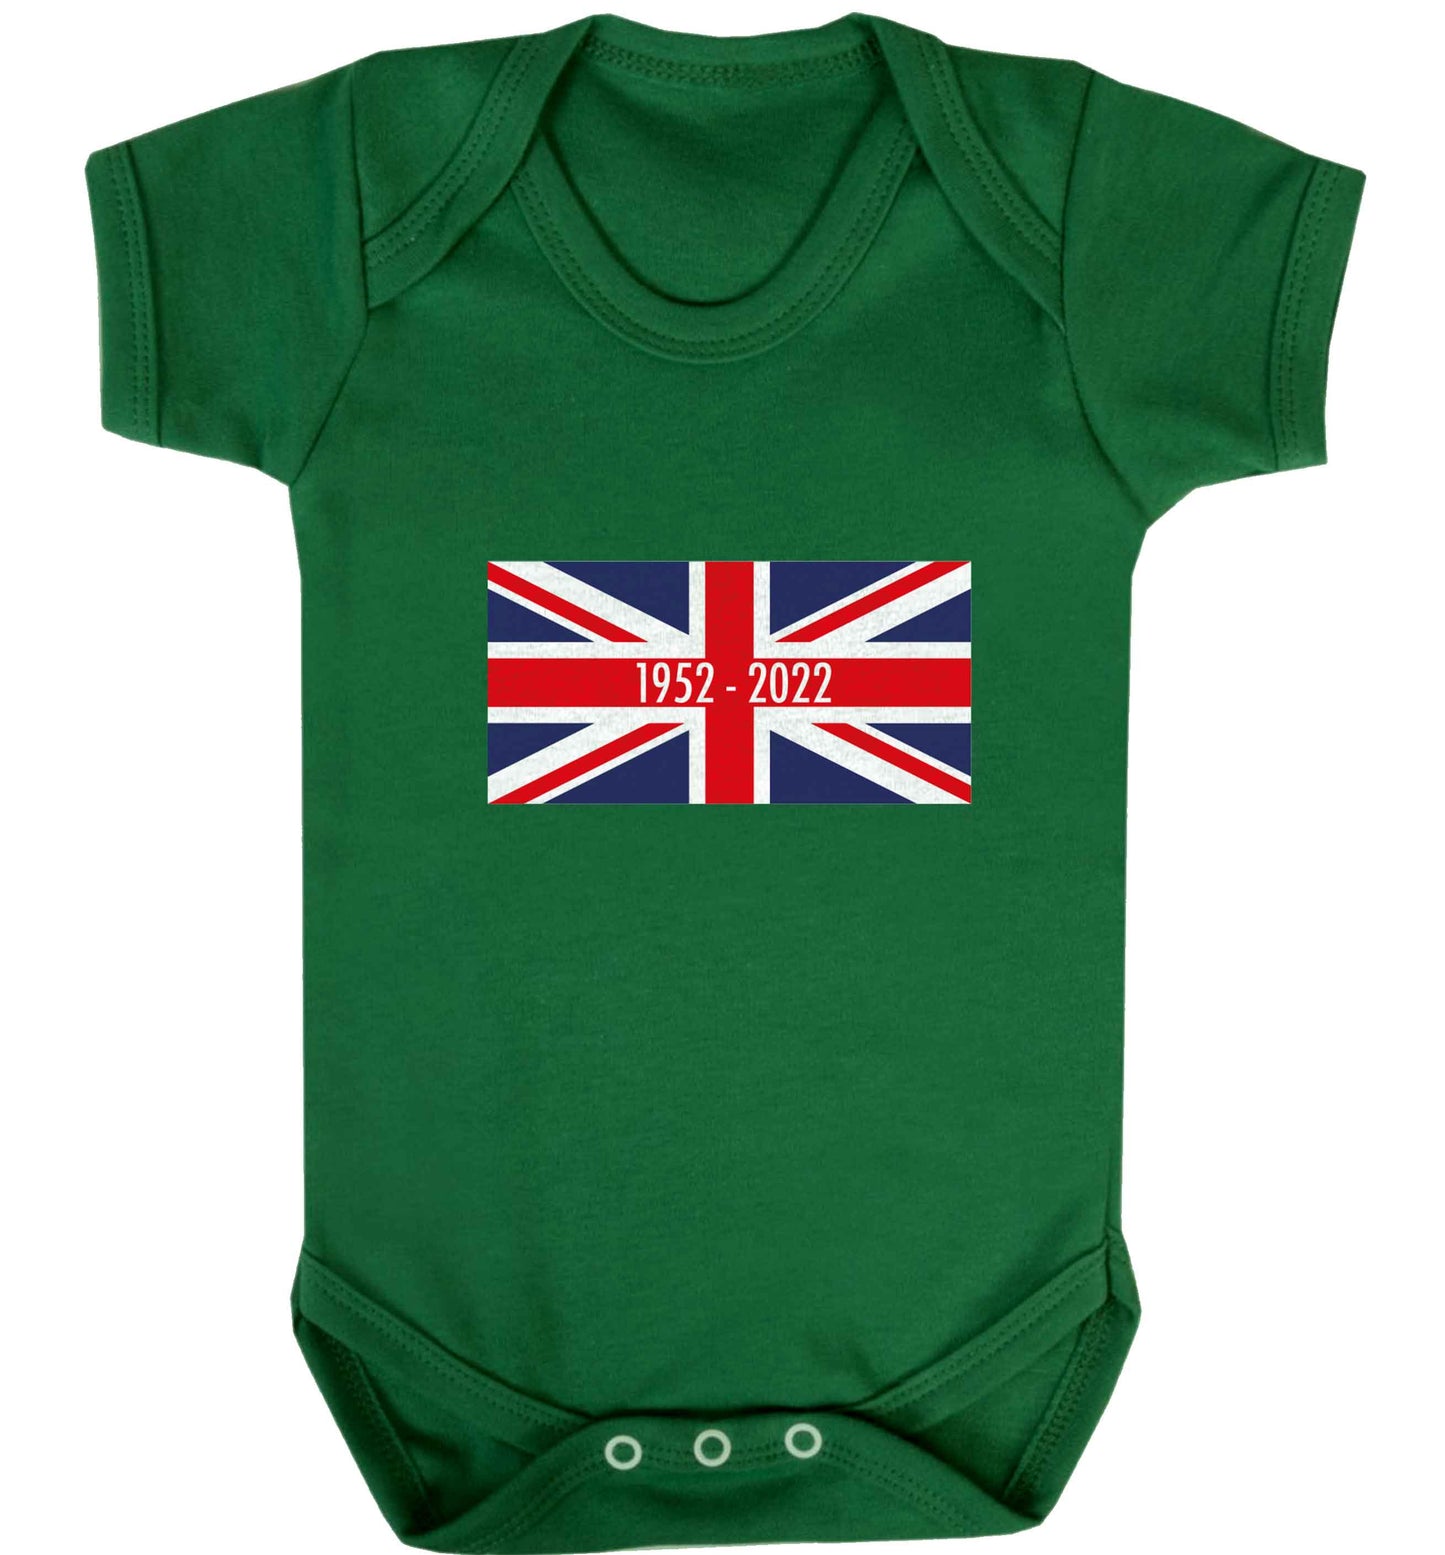 British flag Queens jubilee baby vest green 18-24 months